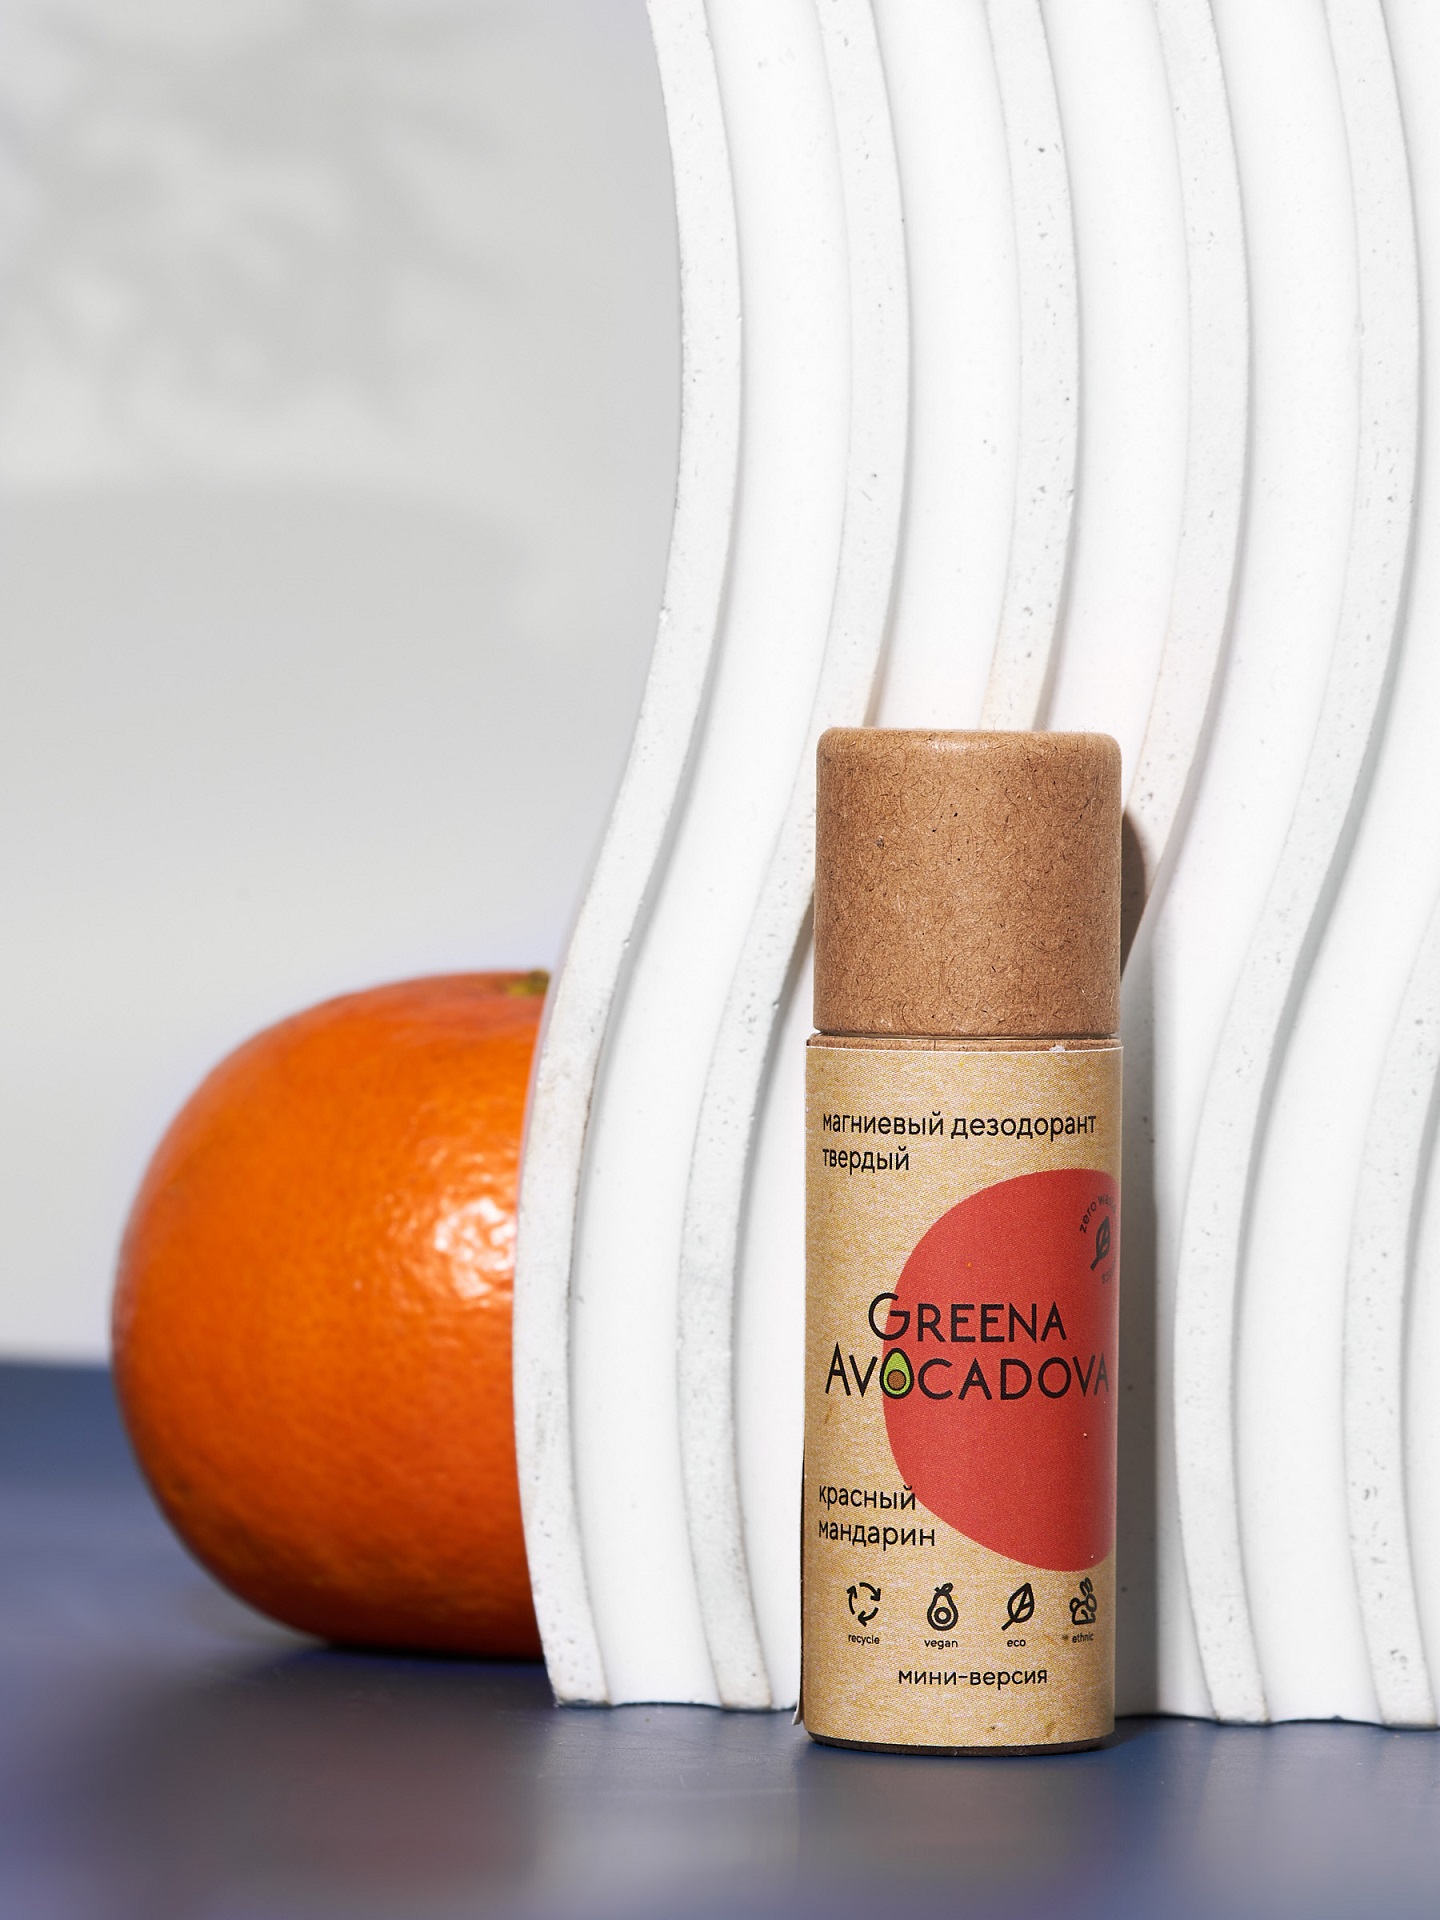 Натуральный твердый дезодорант Greena Avocadova Красный мандарин мини-версия - фото 7